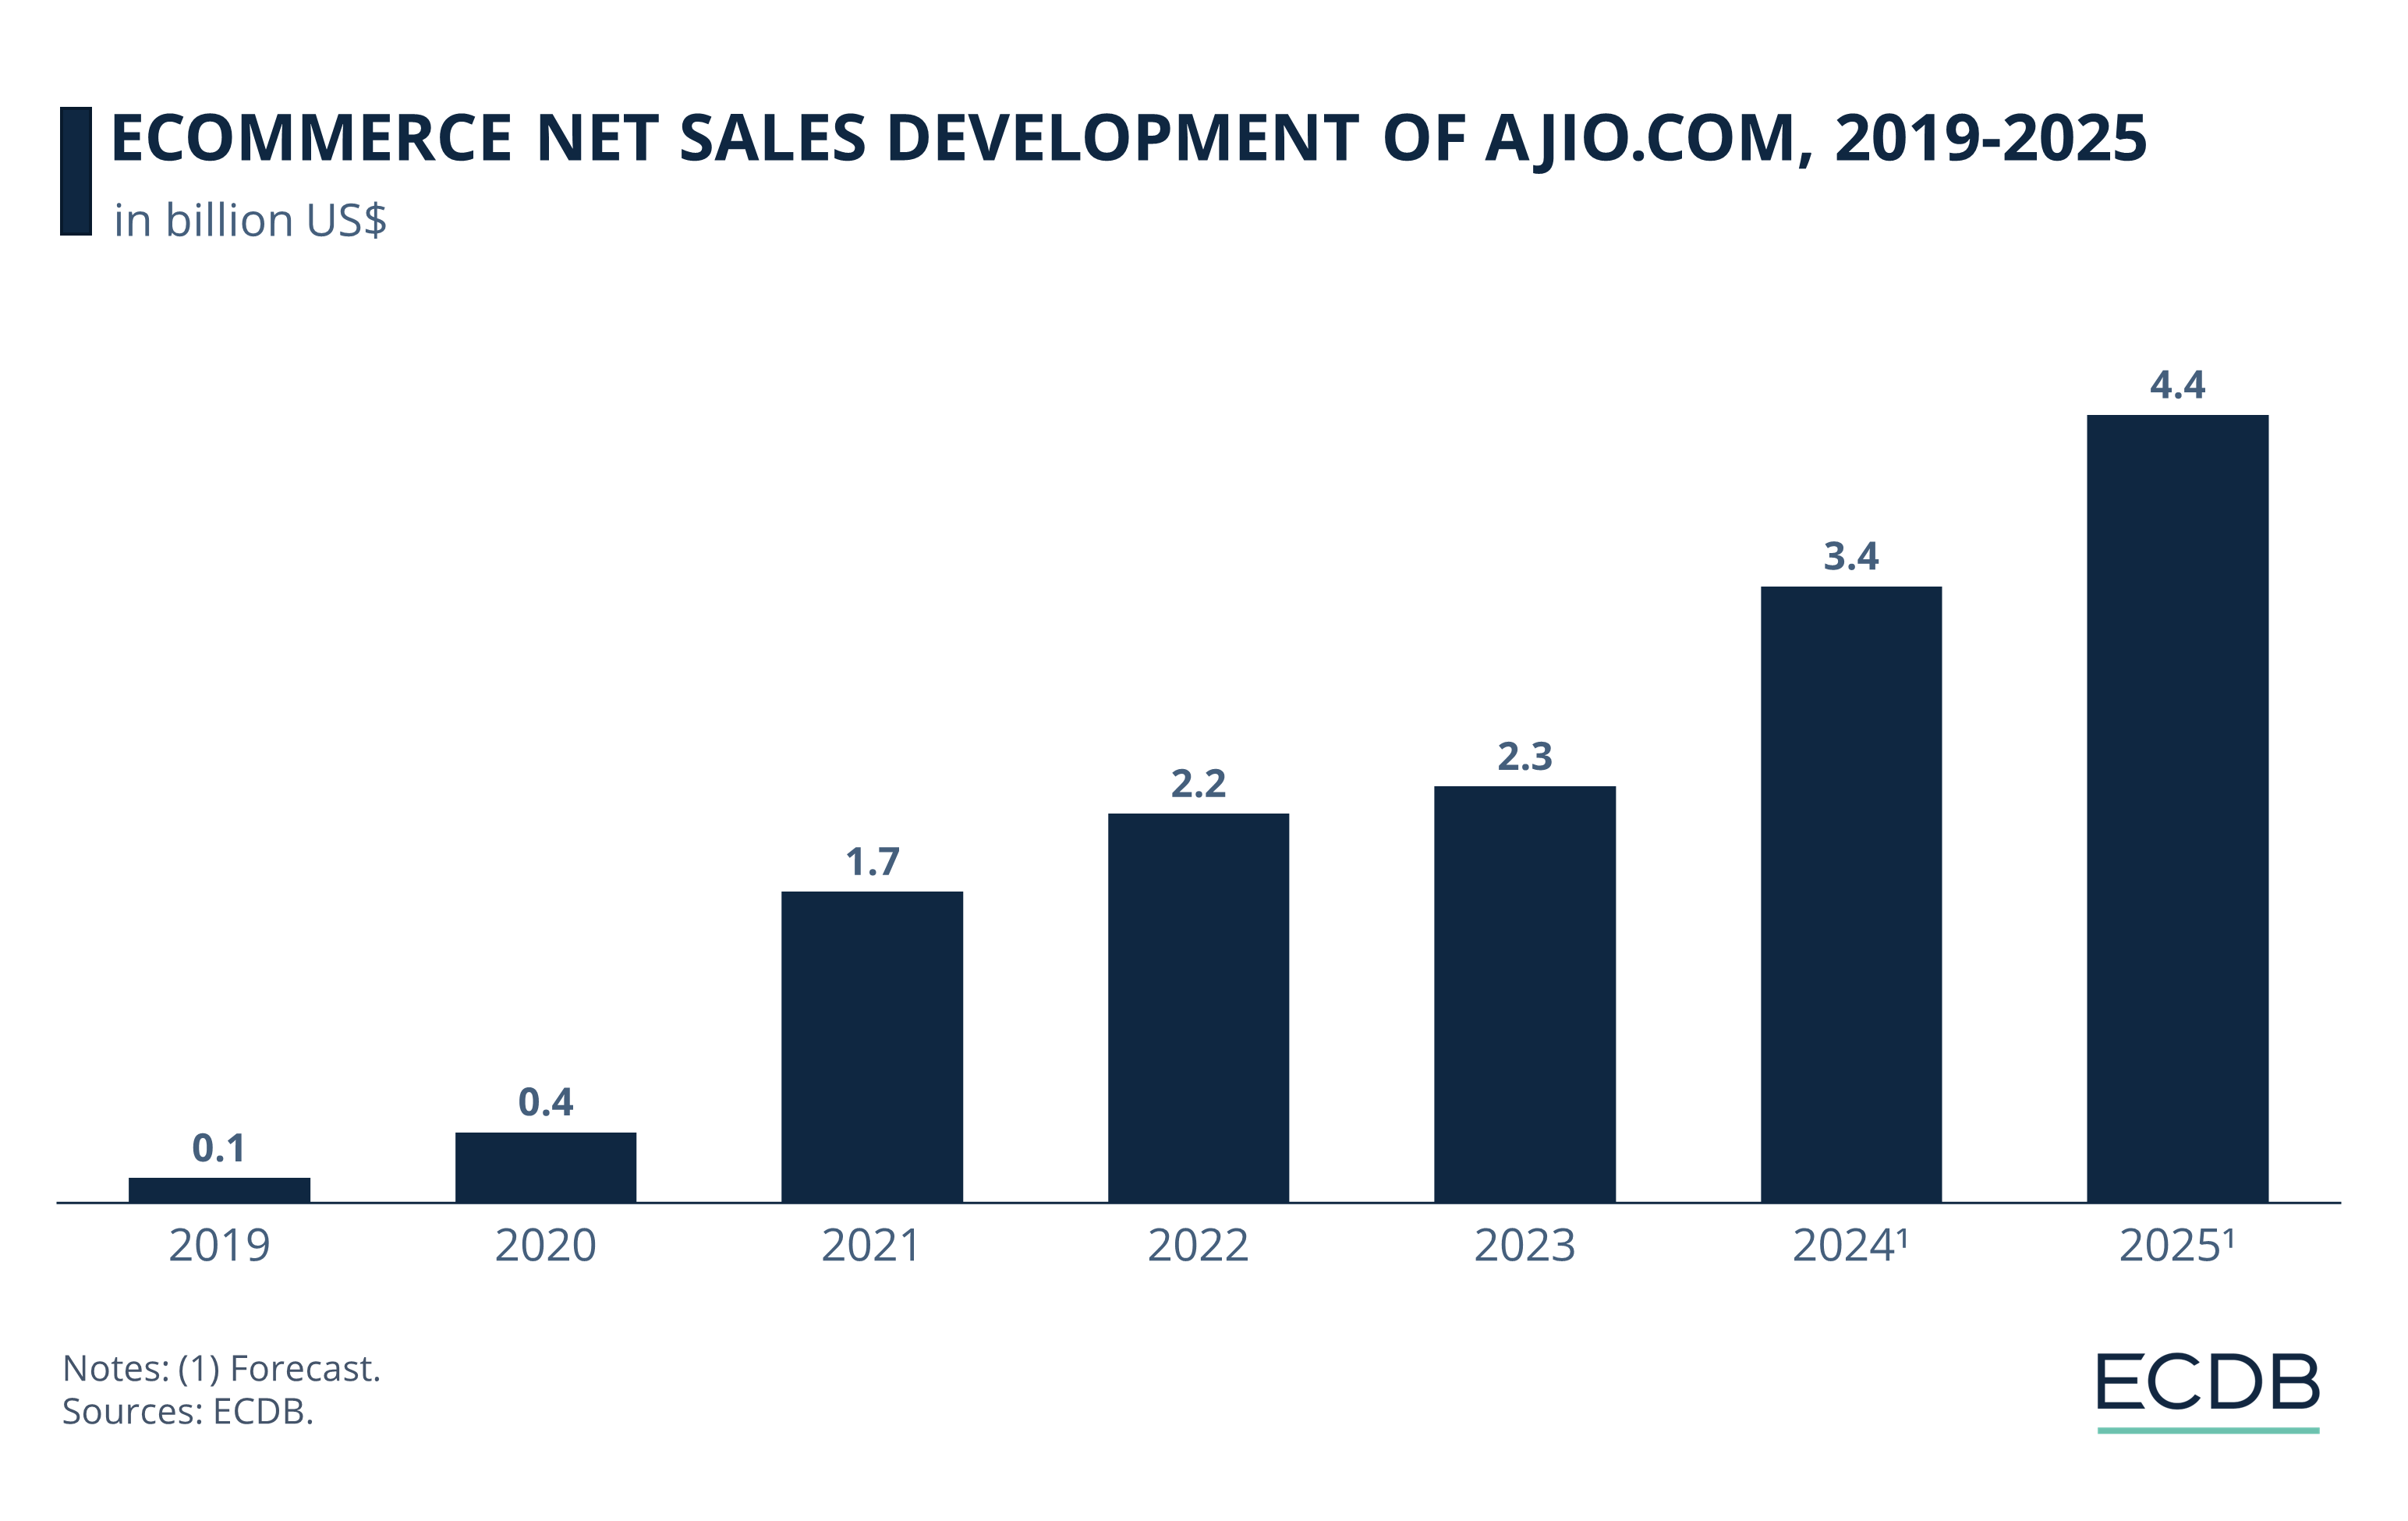 eCommerce Net Sales Development of Ajio.com, 2019-2025